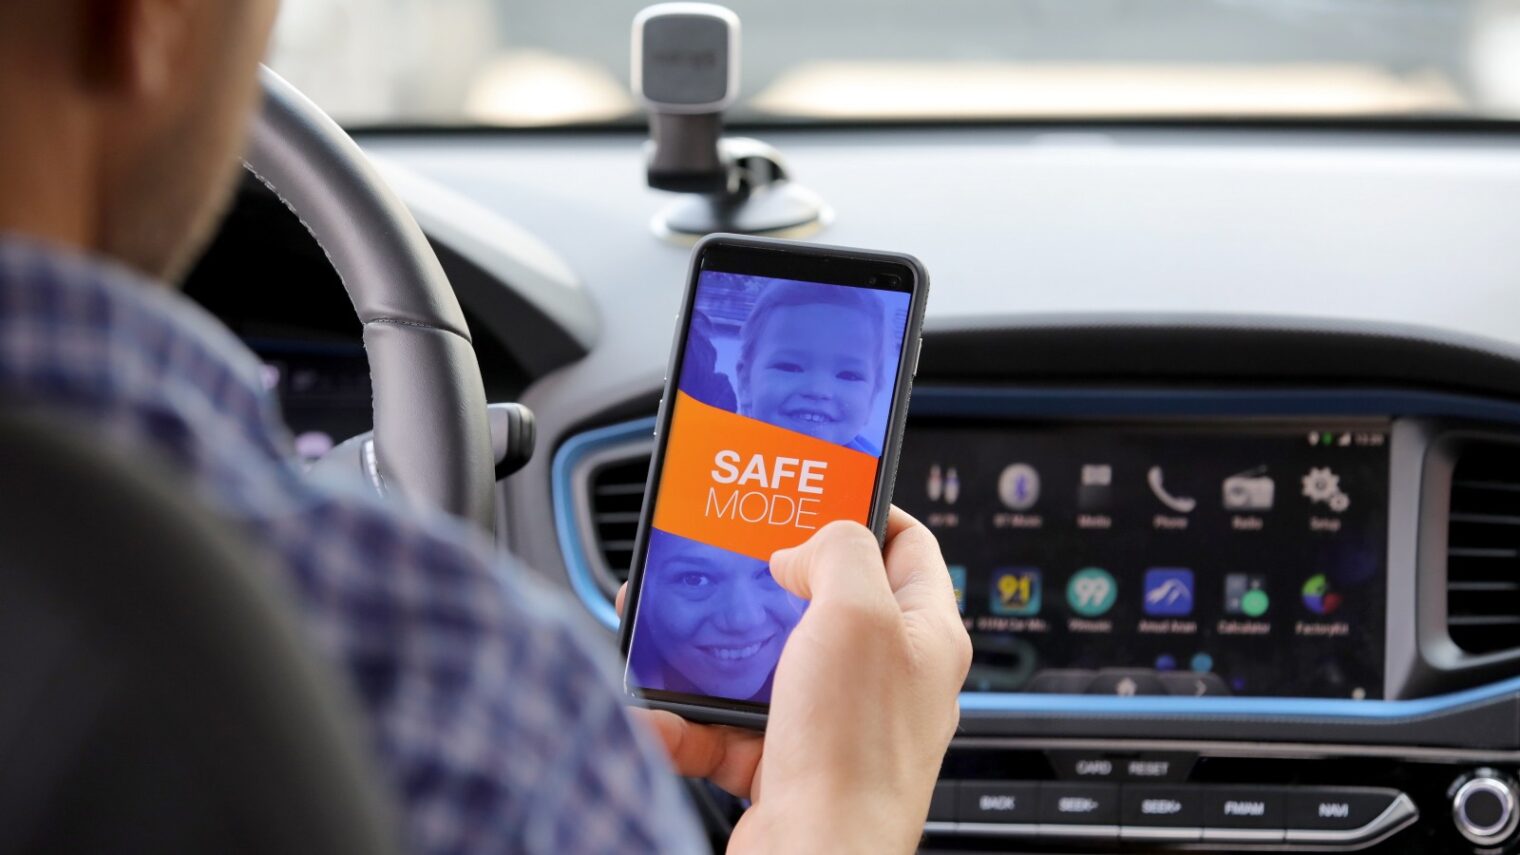 SaverOne automatically limits a driver’s mobile device. Photo by Itzik Biran